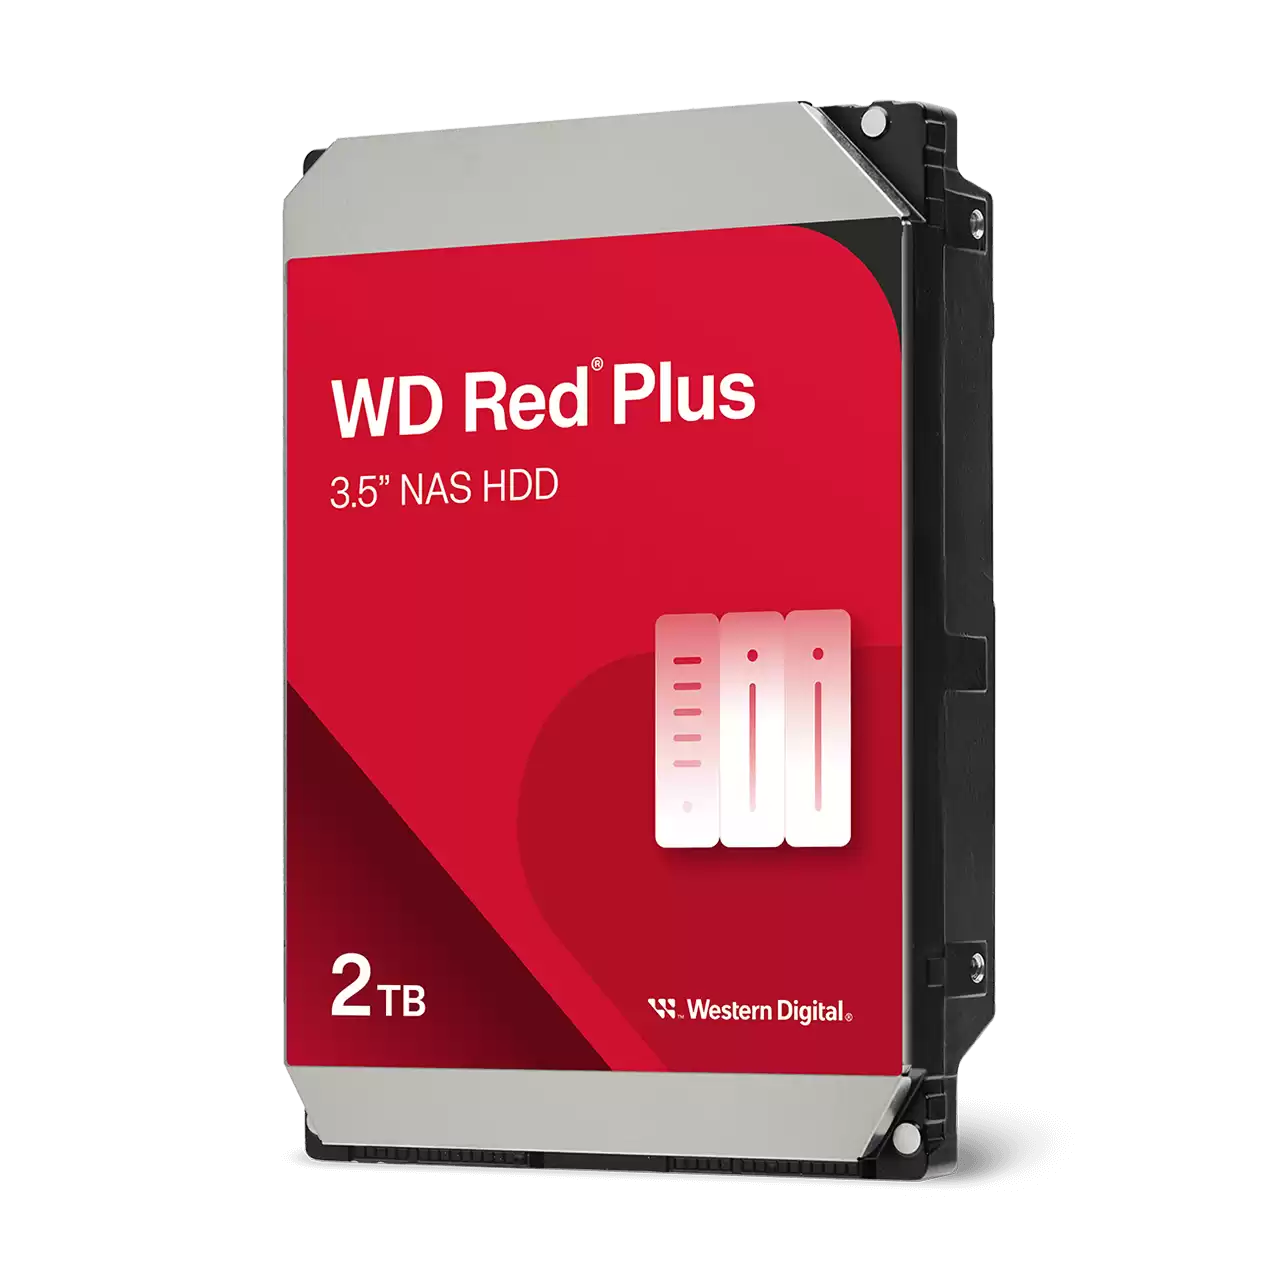 WD Red Plus 2TB NAS Hard Drive - 5400 RPM Class SATA 6Gb/s, CMR, 128MB Cache, 3.5 Inch - WD20EFPX